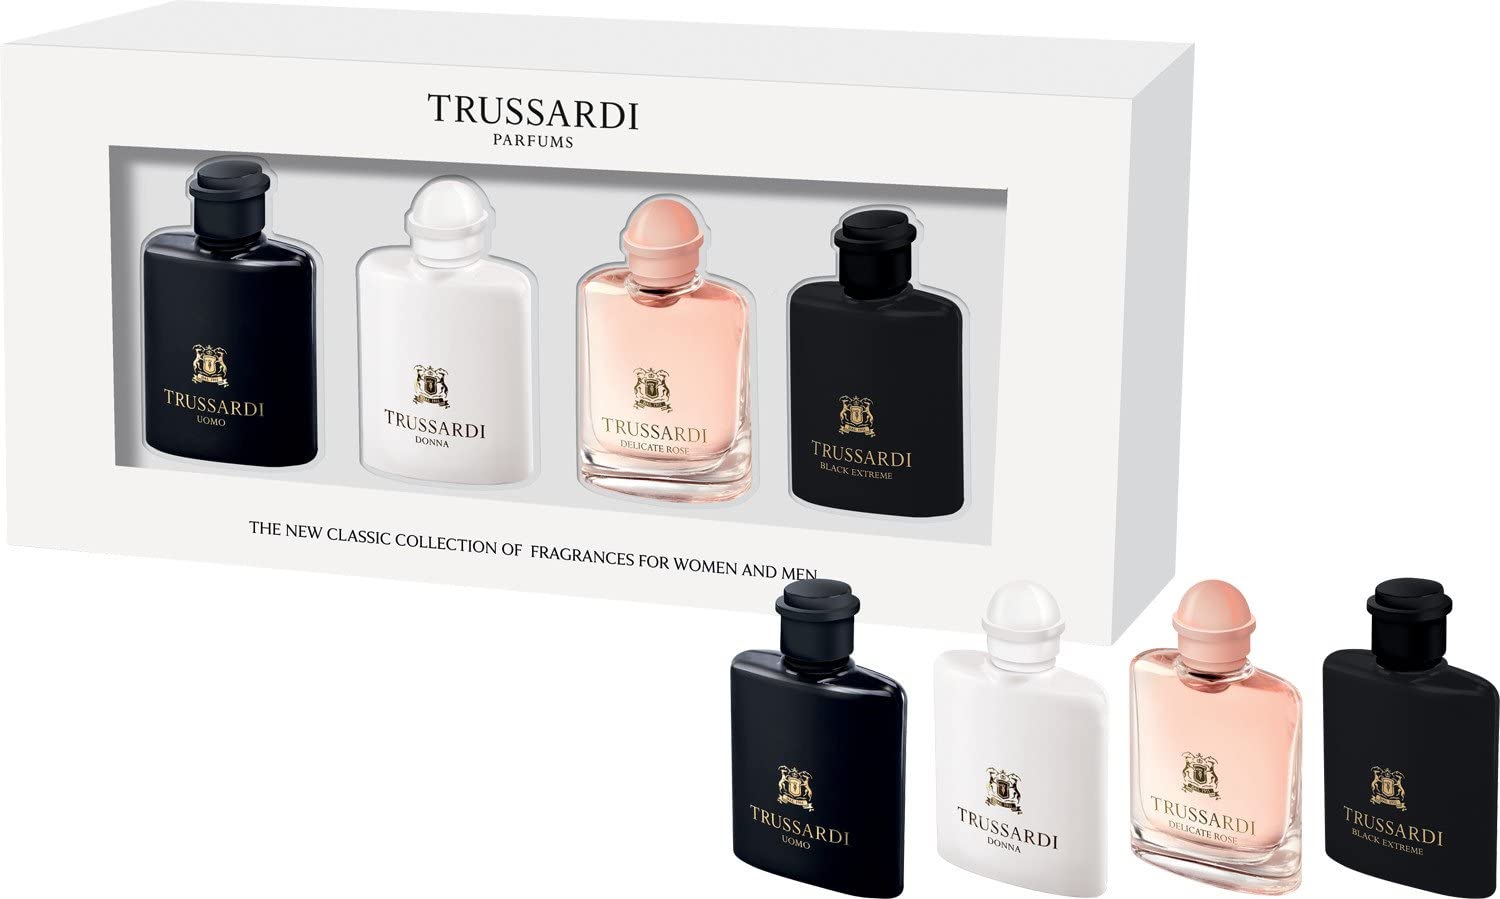 TRUSSARDI perfume range at THE PERFUME WORLD